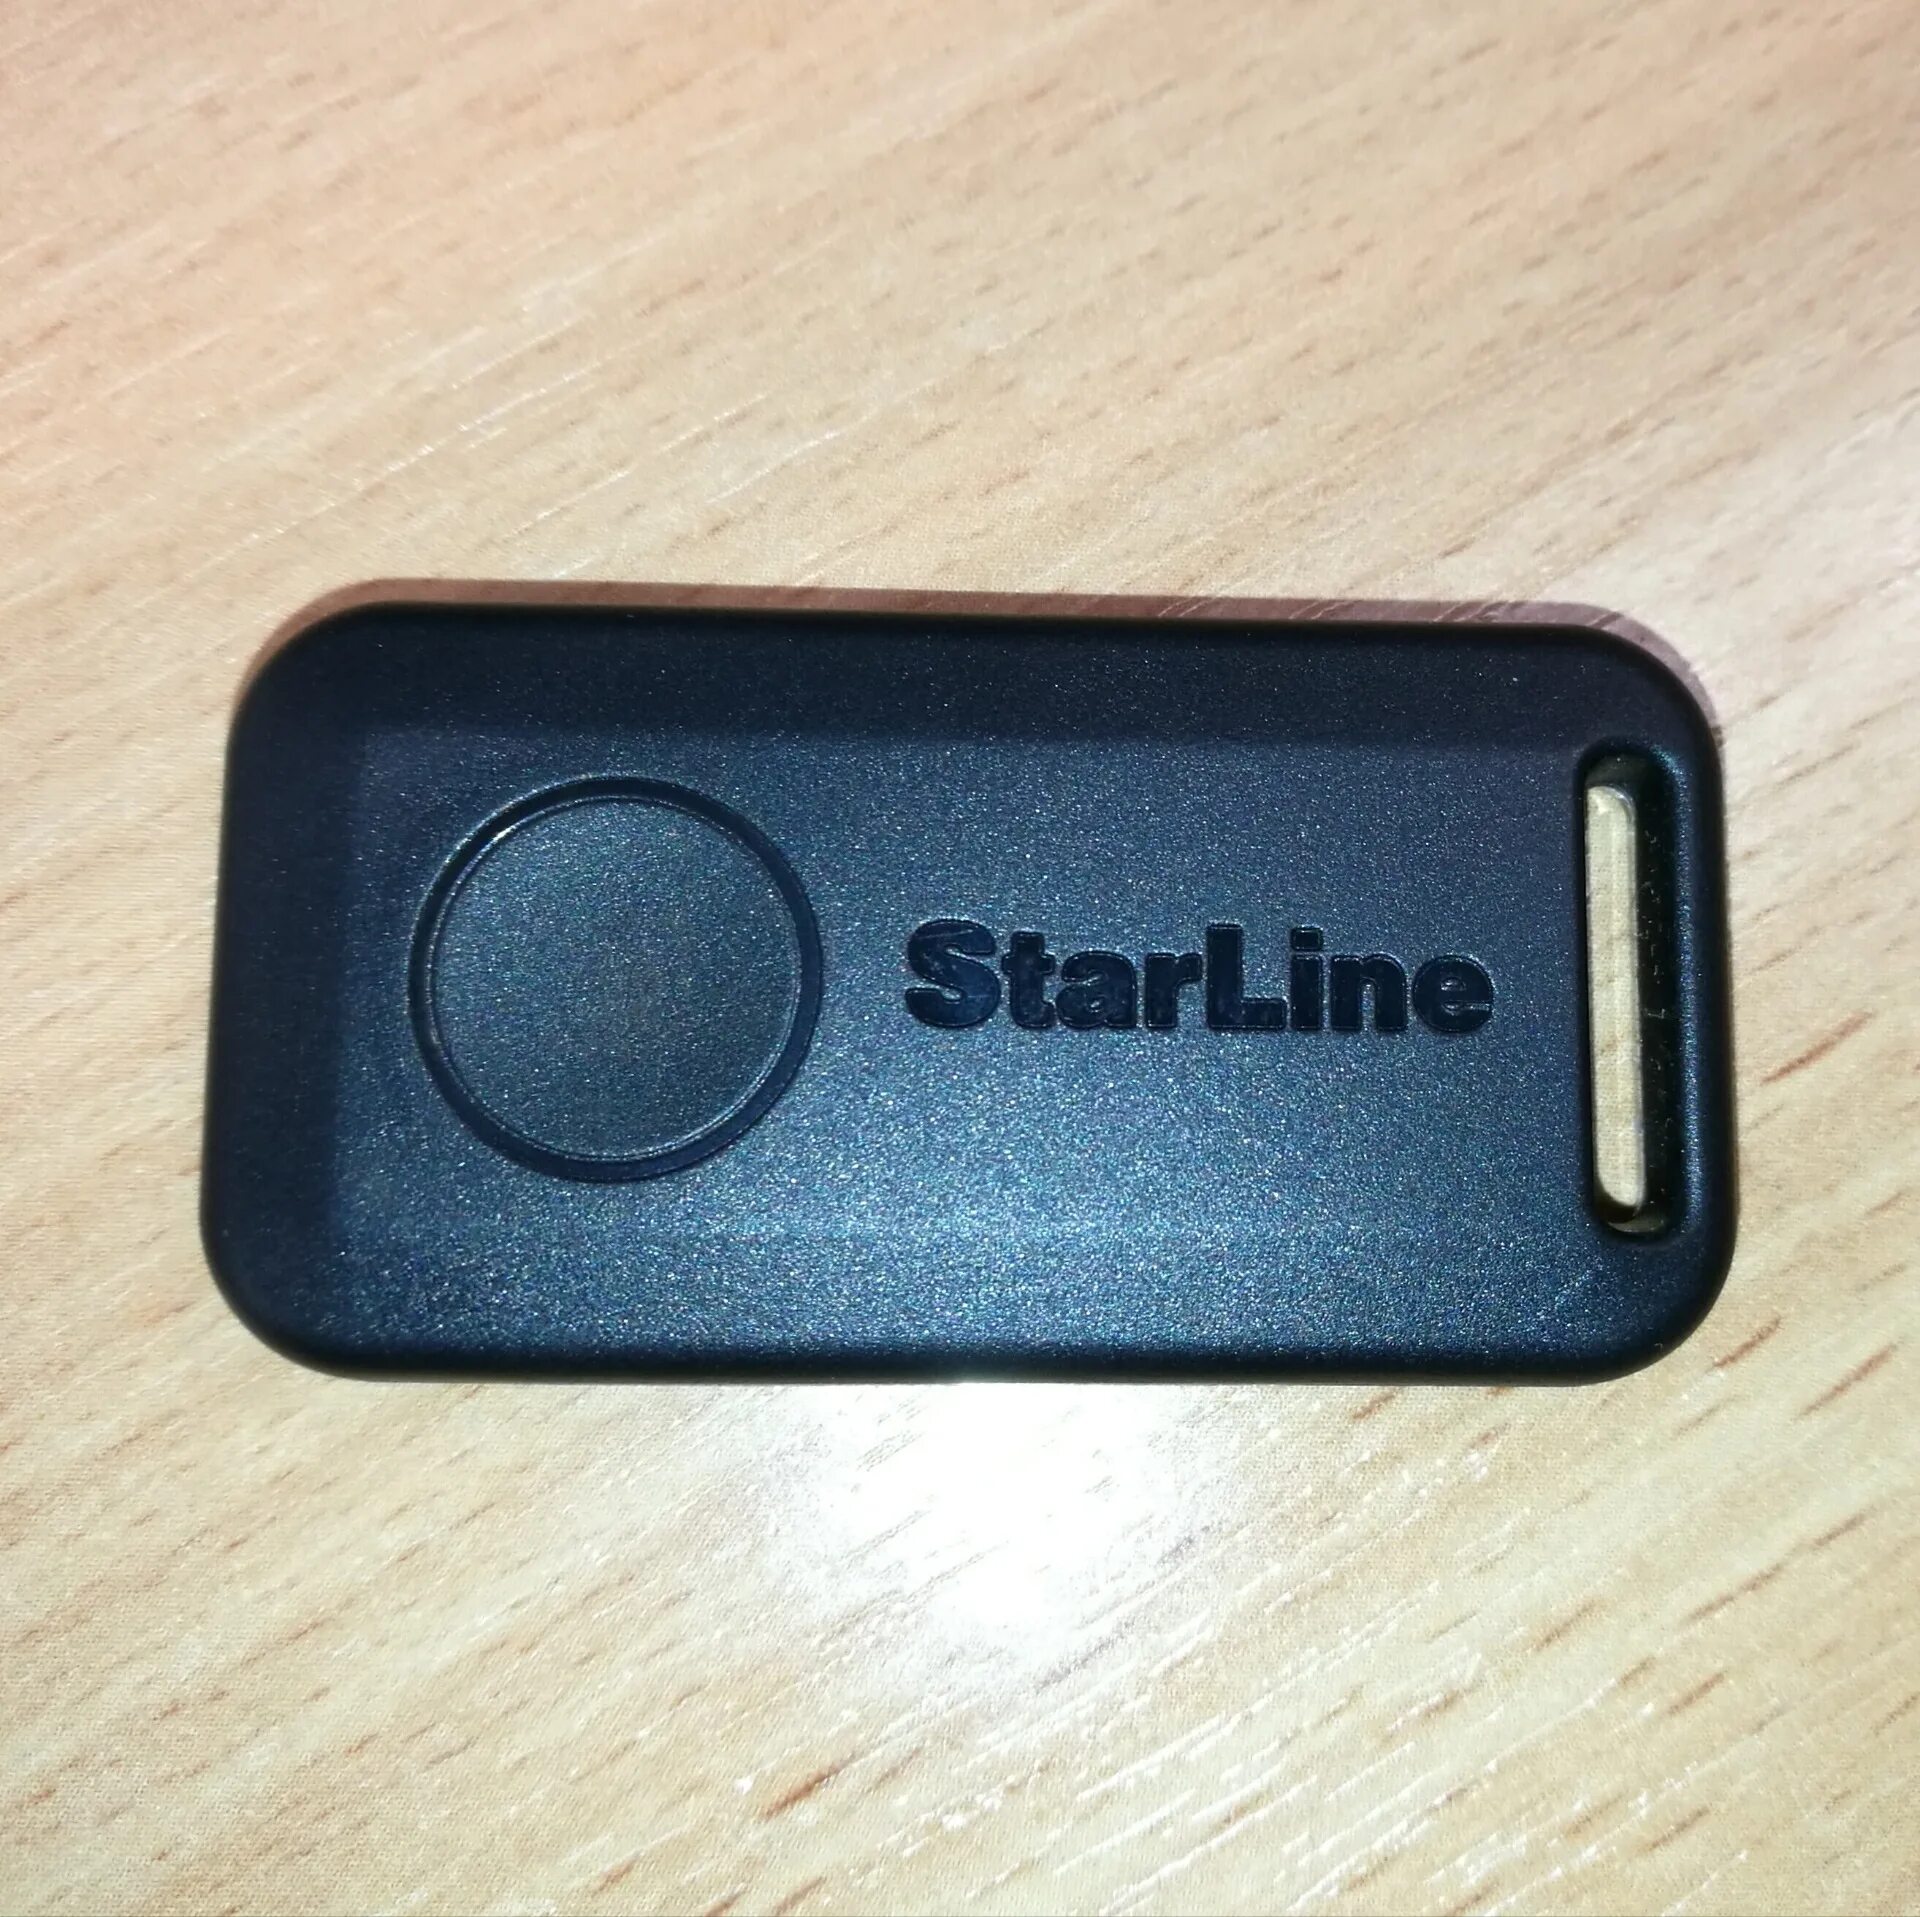 Метка STARLINE s96. Старлайн s96. Сигнализация STARLINE s96 v2. STARLINE a96 v2 брелок. Метка старлайн 96